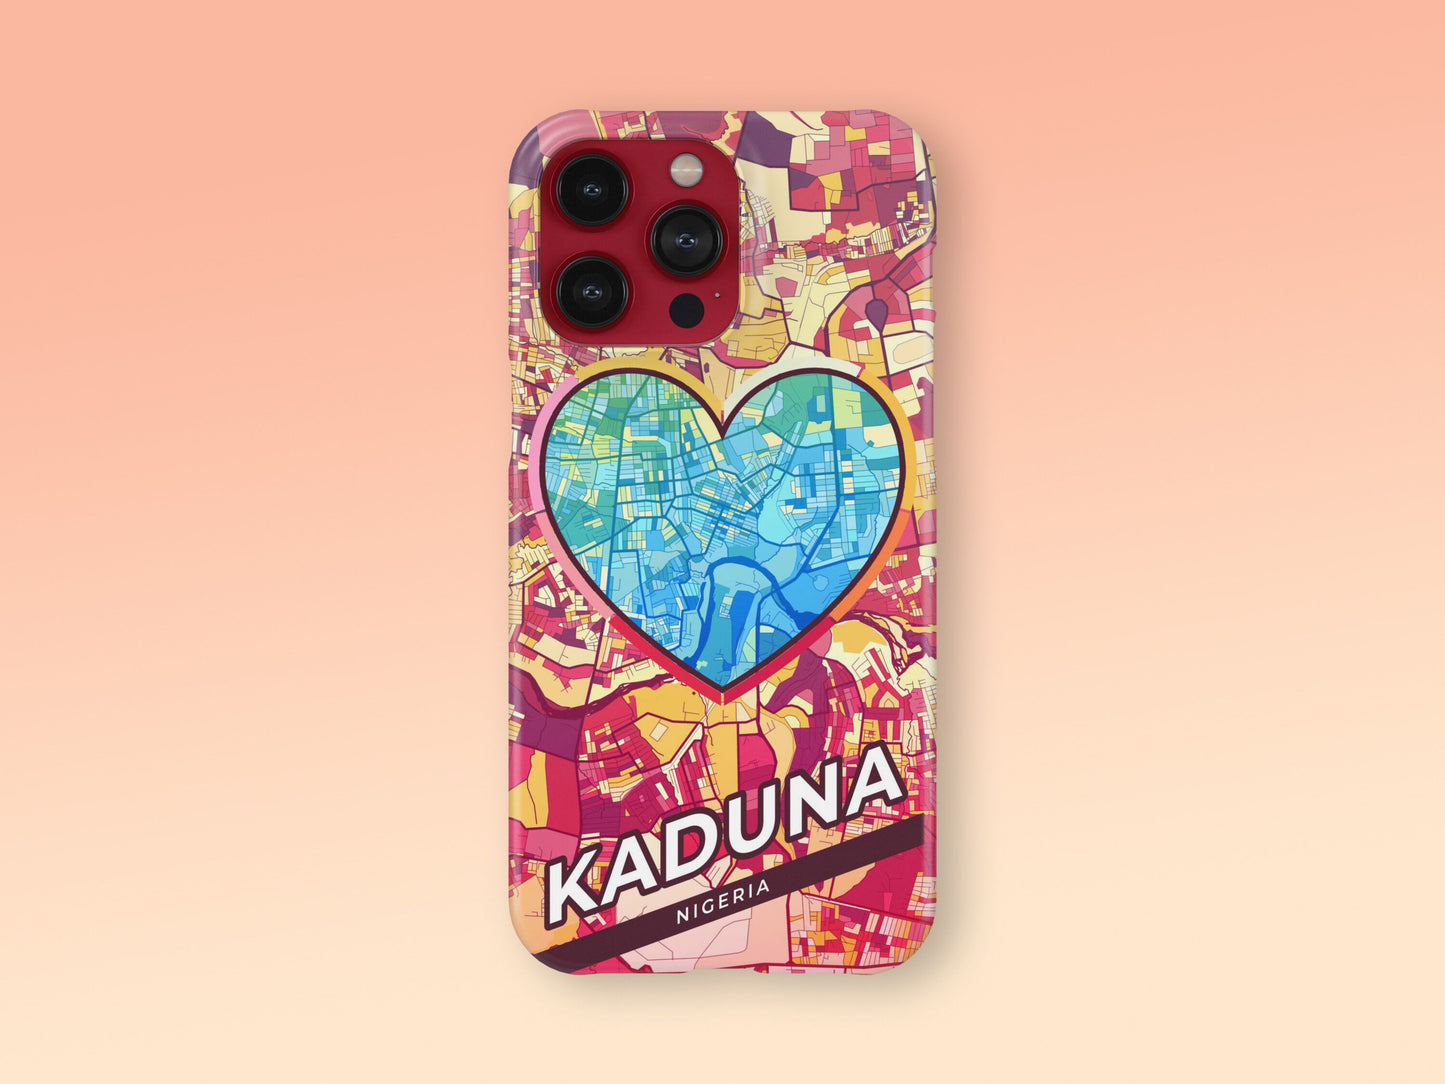 Kaduna Nigeria slim phone case with colorful icon. Birthday, wedding or housewarming gift. Couple match cases. 2